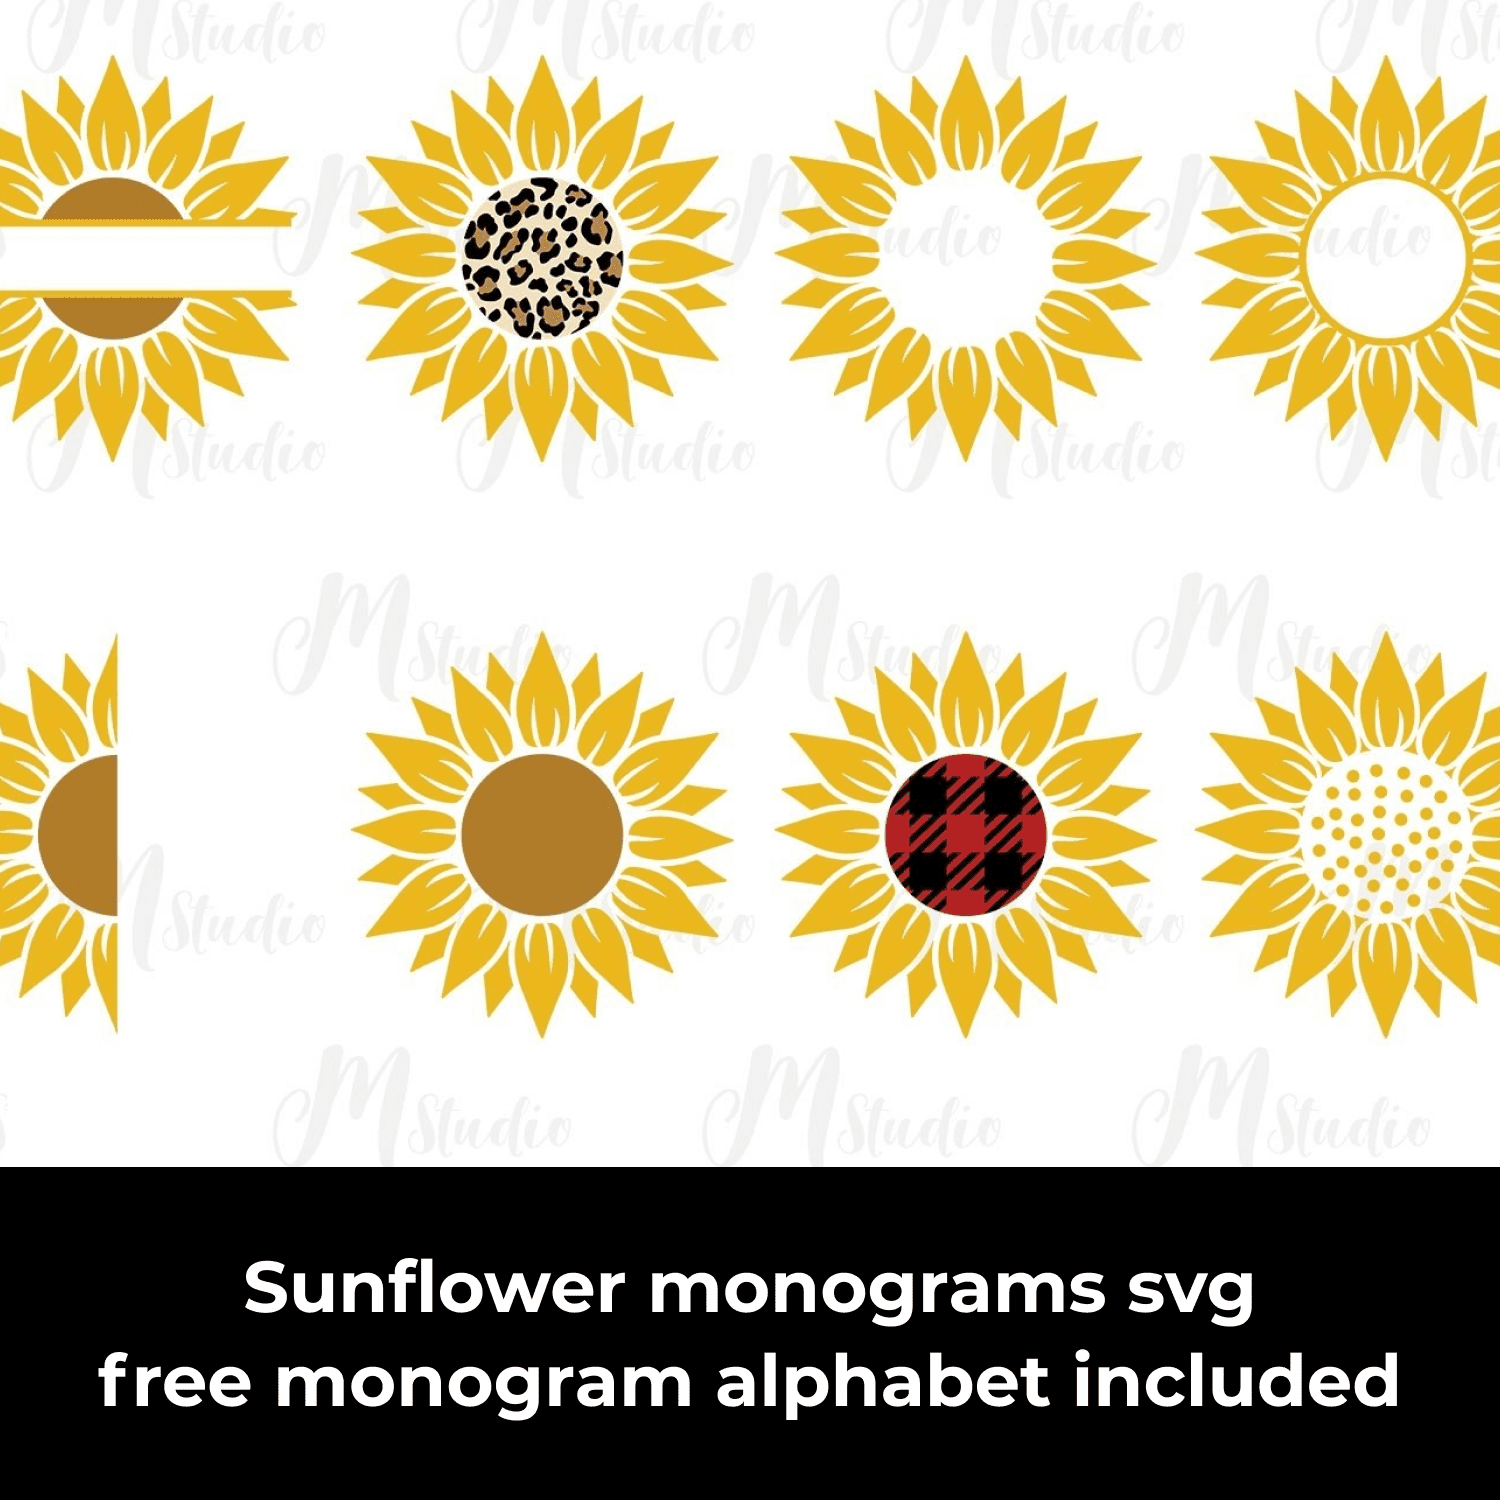 Sunflower monograms svg, free monogram alphabet included cover.